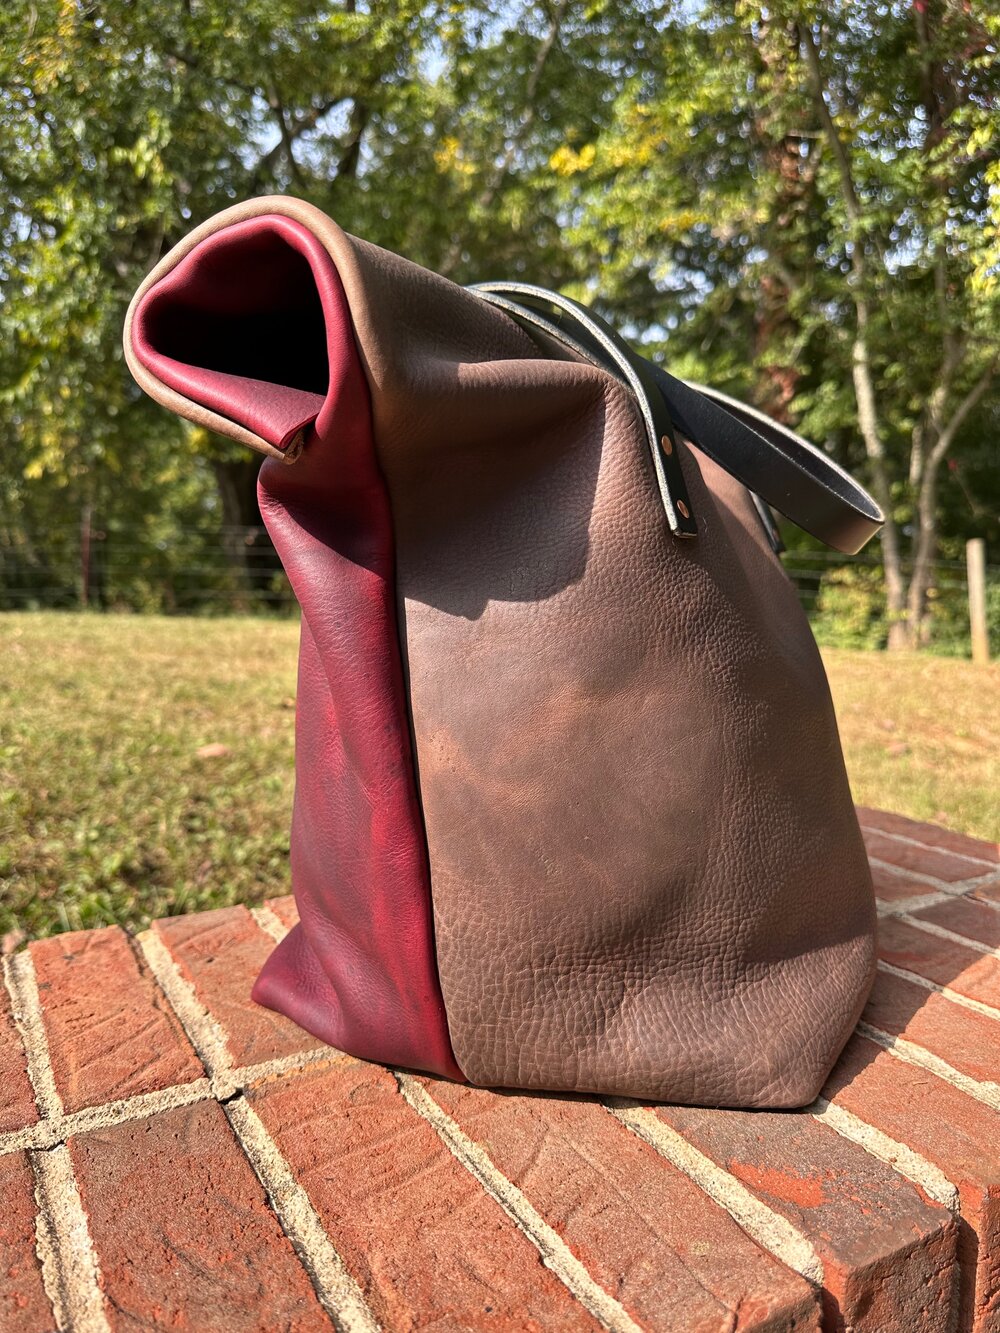 Rosewood leather handbag